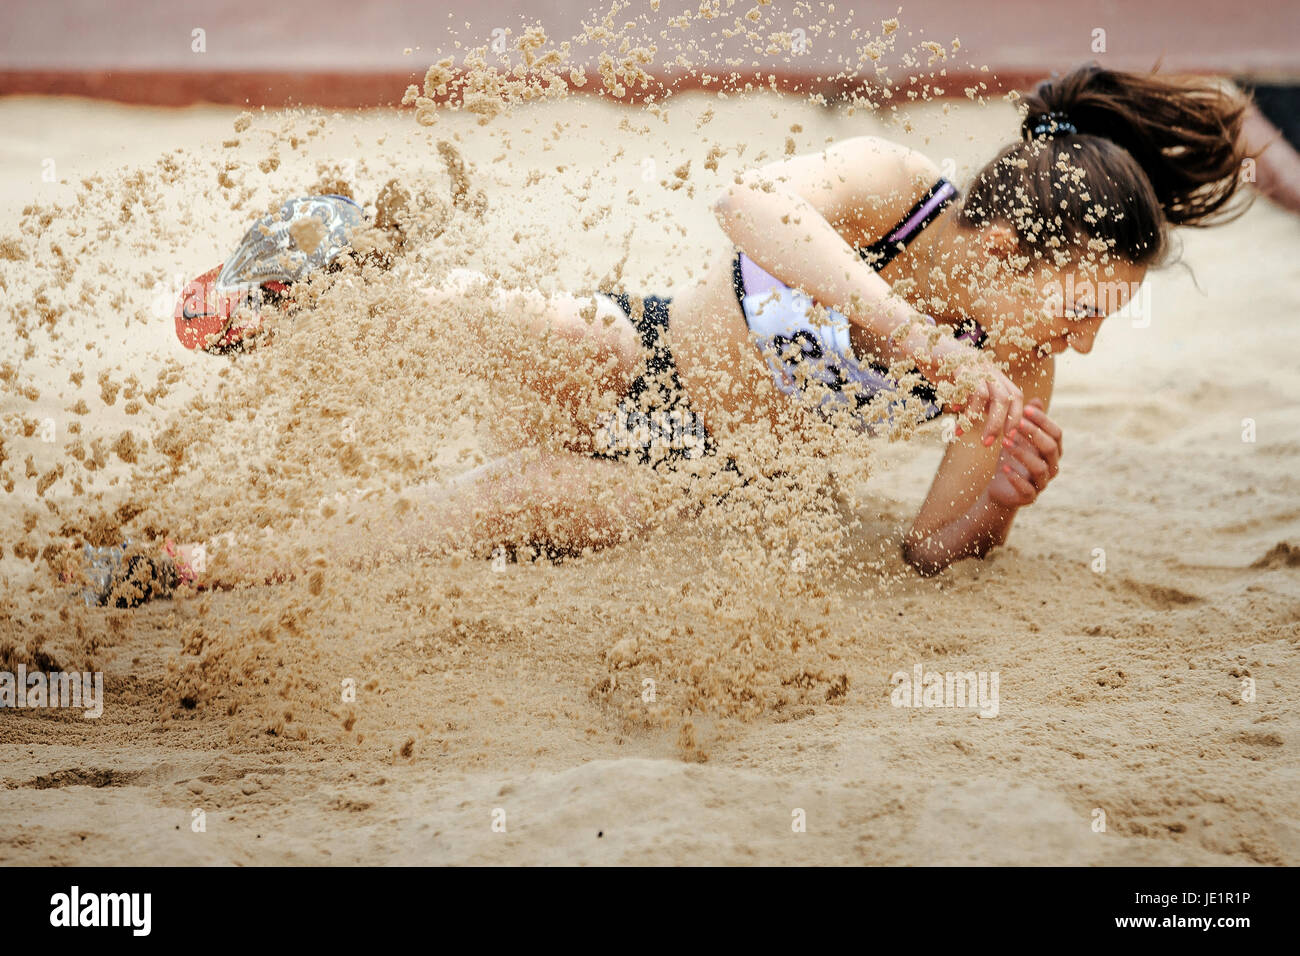 women jumper landing in sand long jump during UrFO Championship in athletics Stock Photo